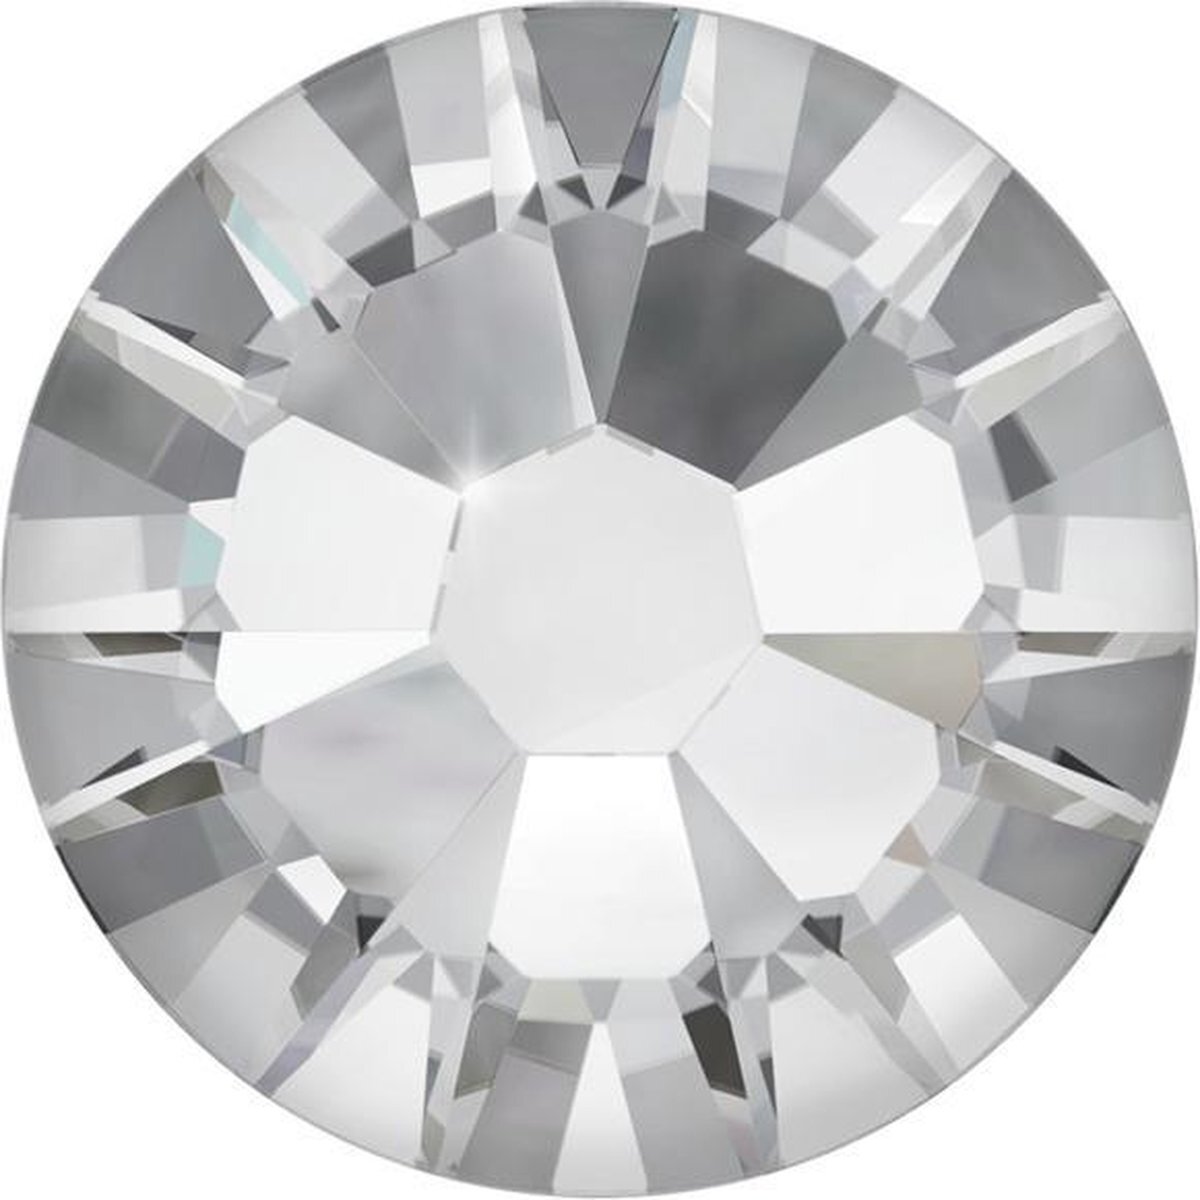 Swarovski Kristal Crystal SS34 7.1mm 100 steentjes - steentjes - steentje - steen - nagels - sieraden - callance